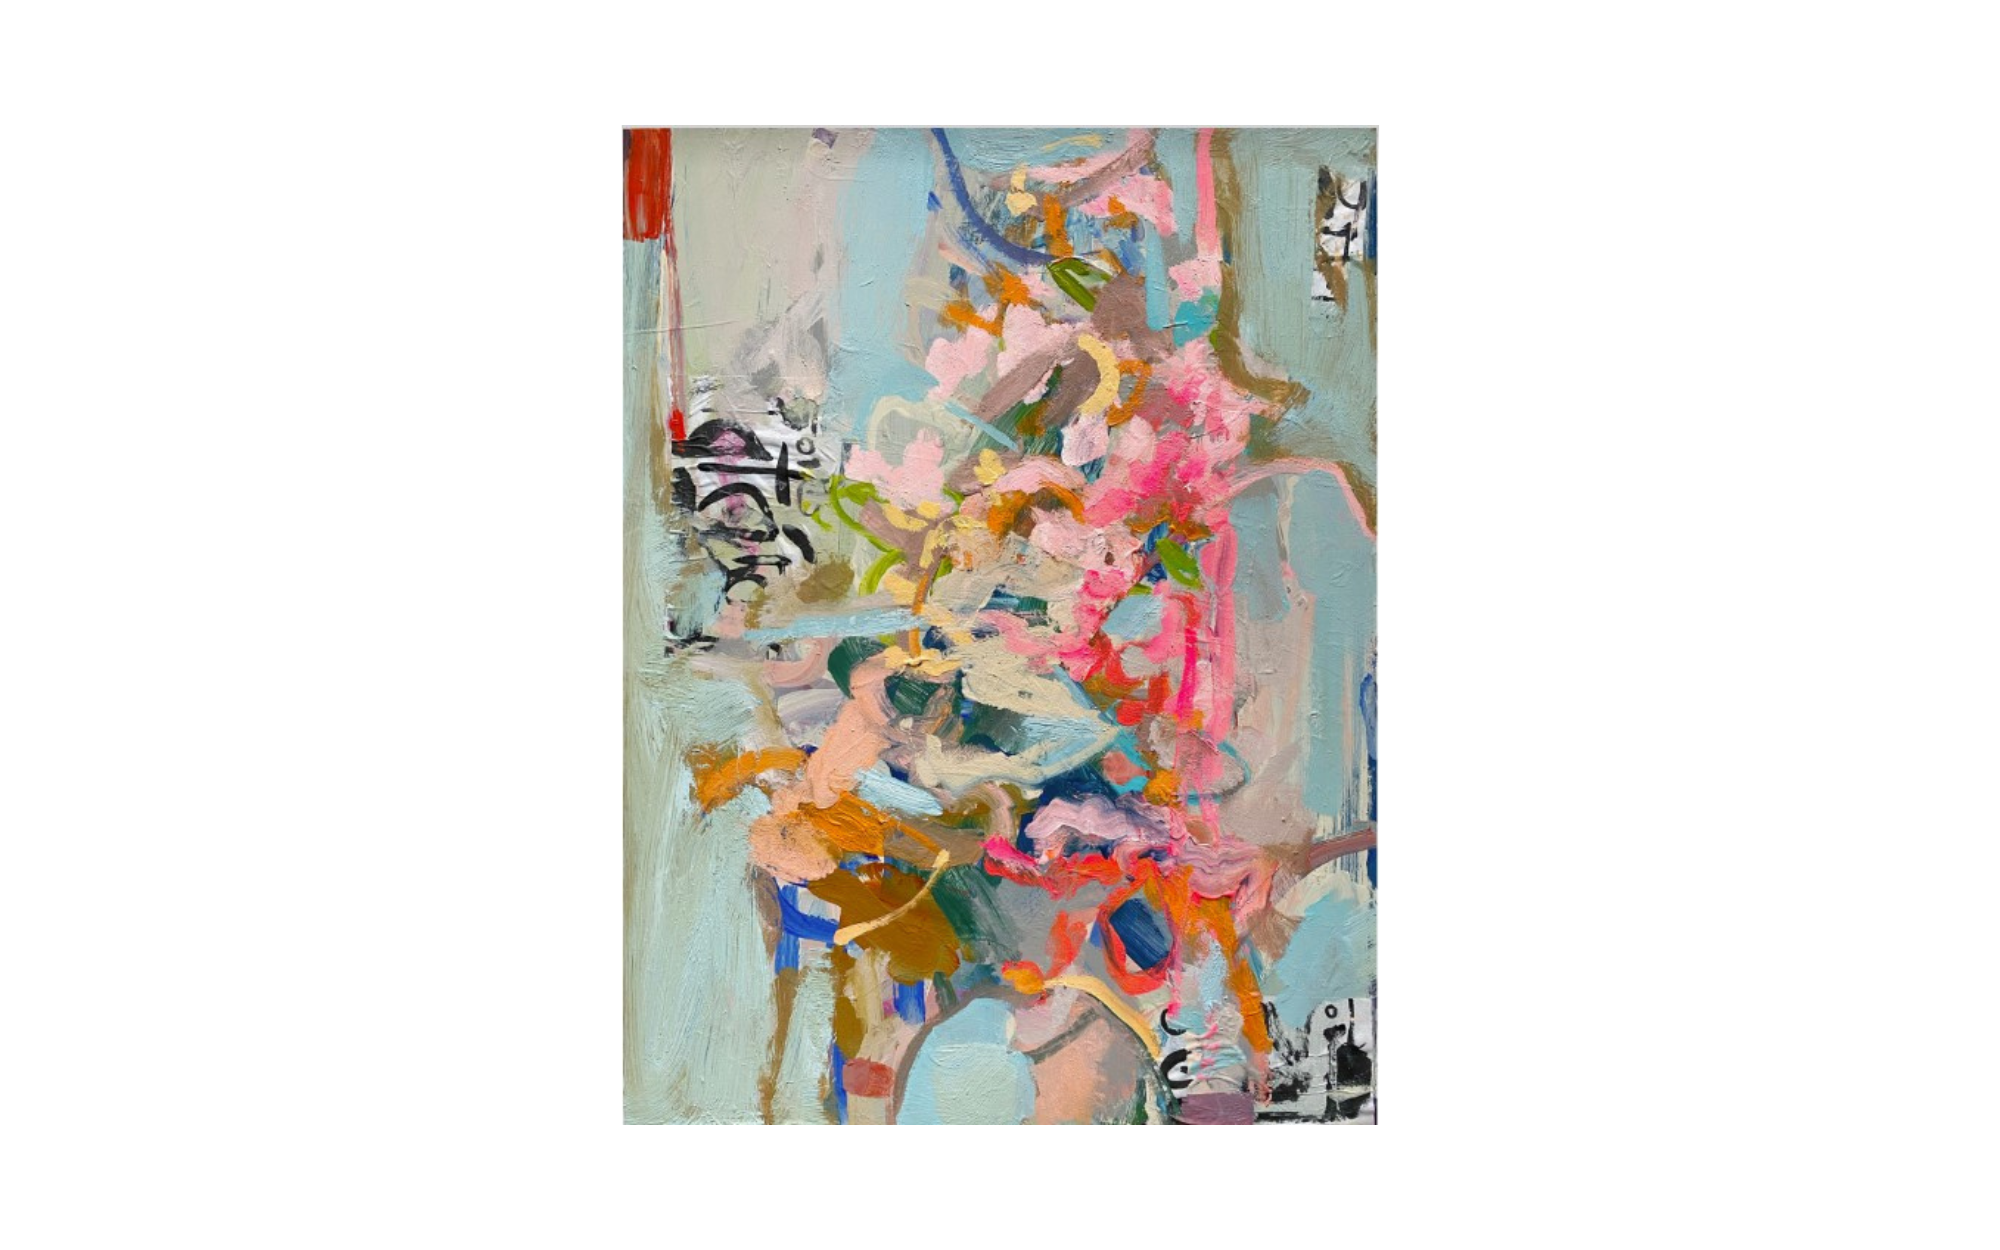  Carol Barber,  Balanced Descension II  (2022), 18 x 24”, acrylic and rice paper on panel, $900 